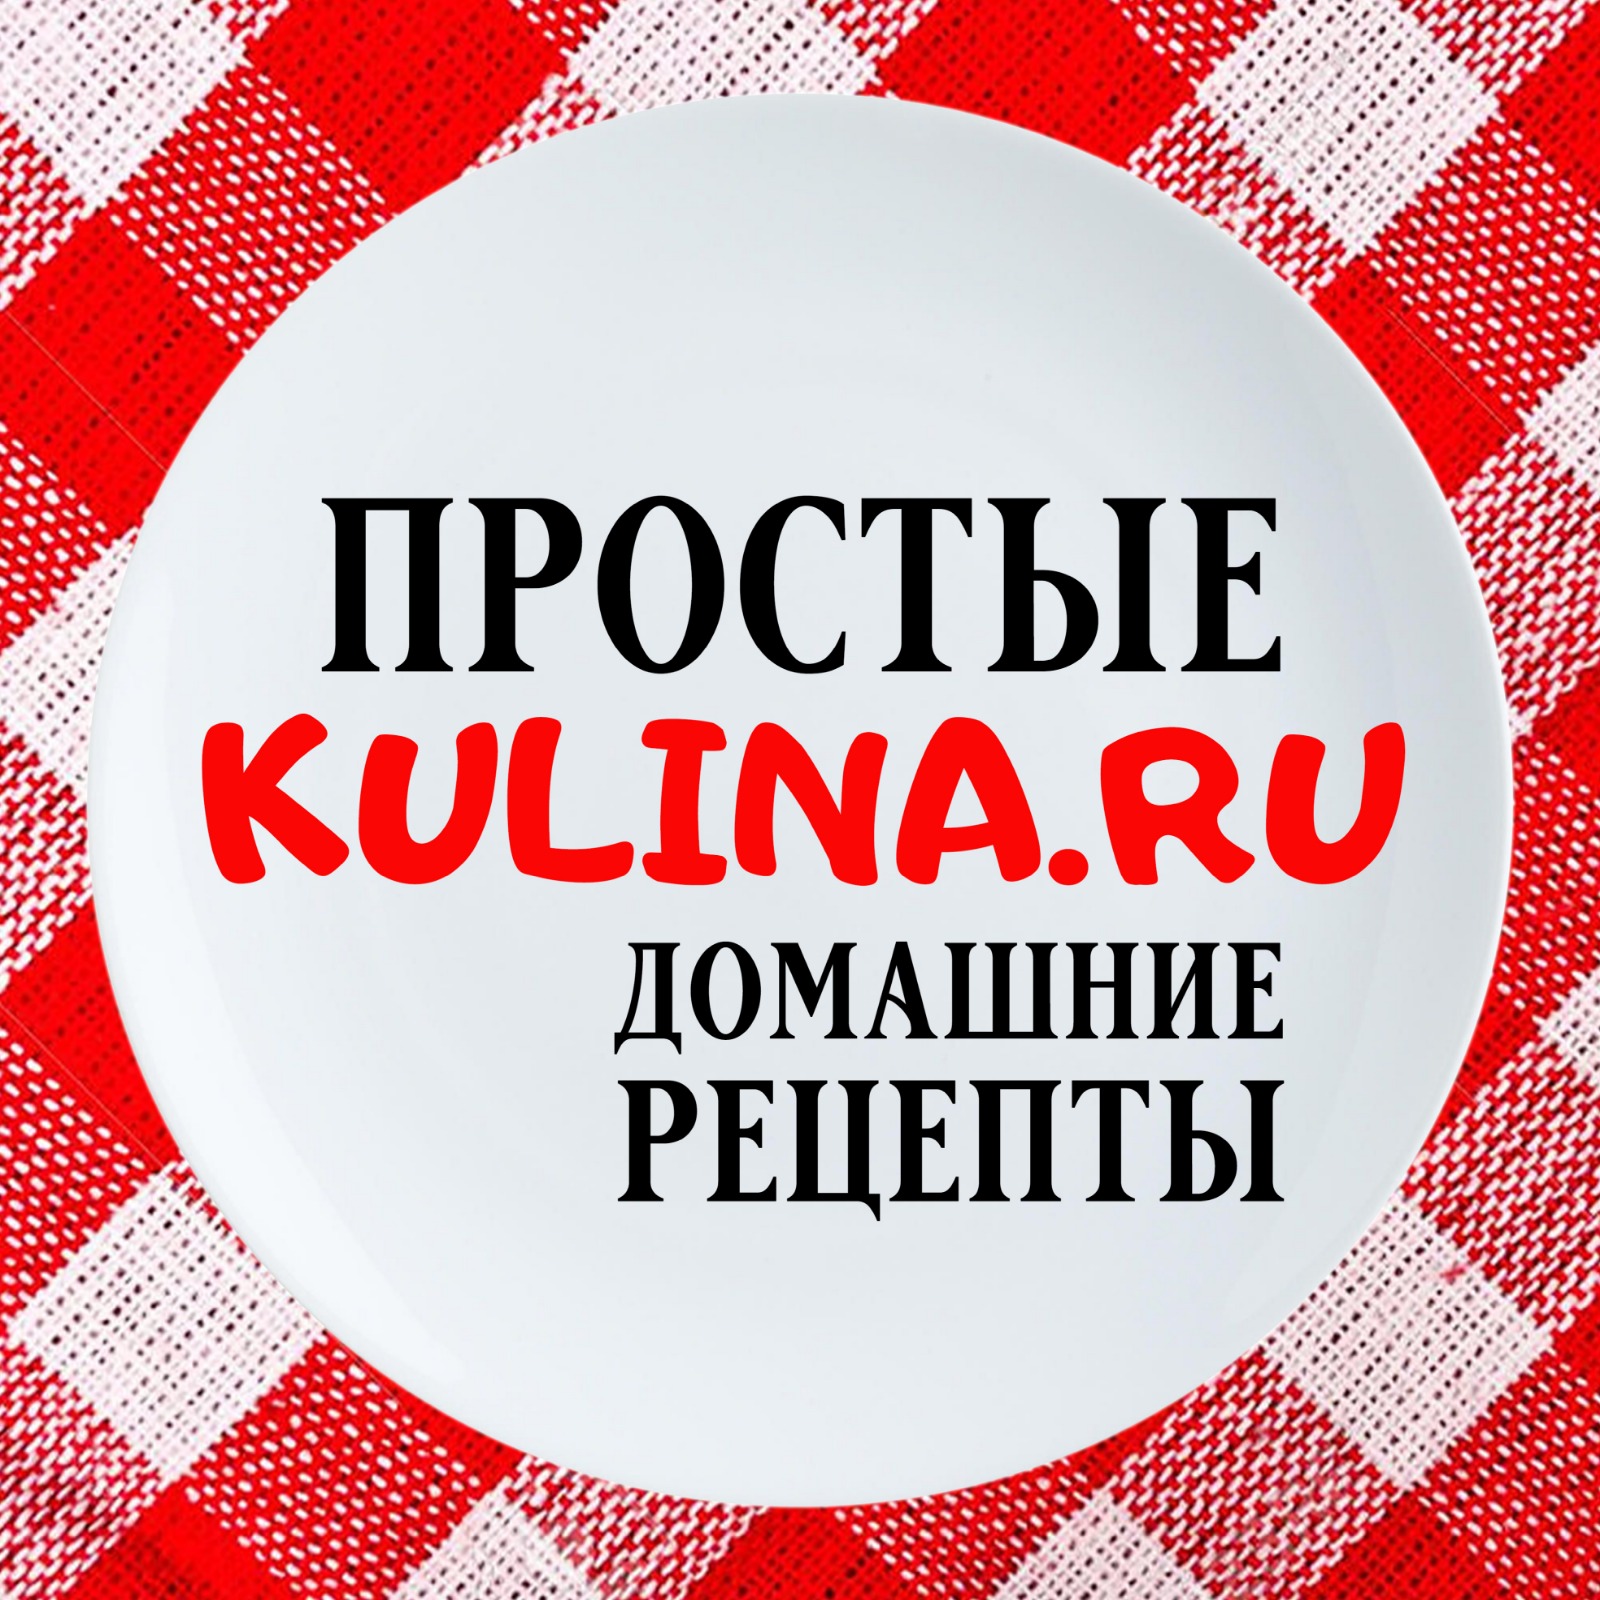 Kulina.ru — кулинария, кулинарные рецепты блюд с фото